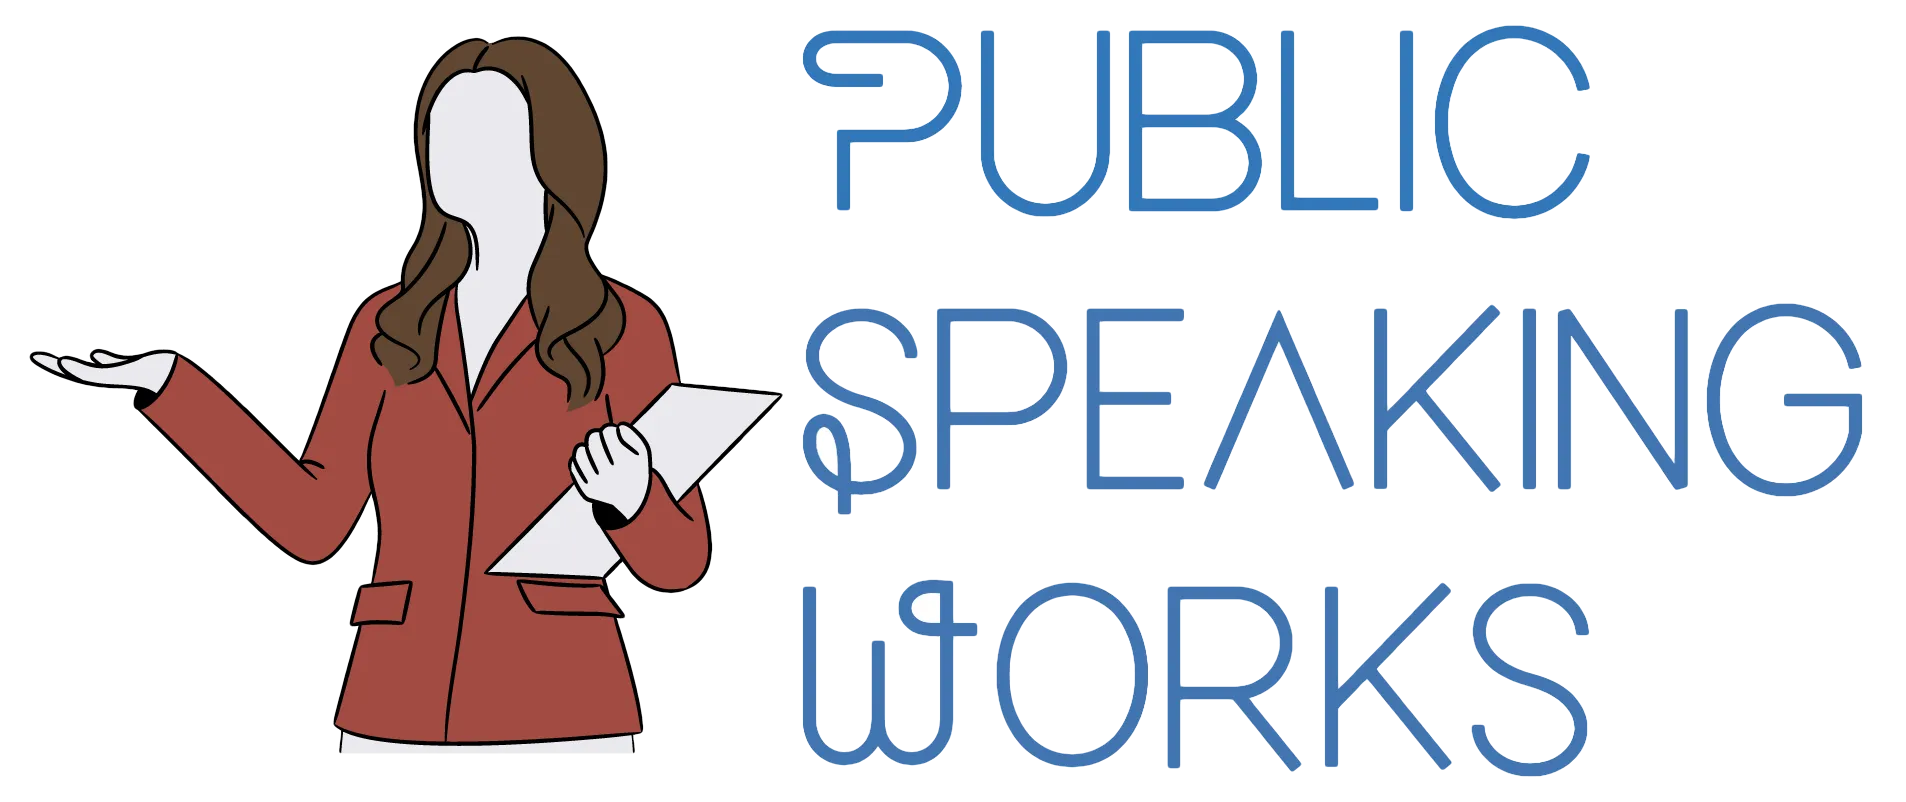 Public Speaking Works logo